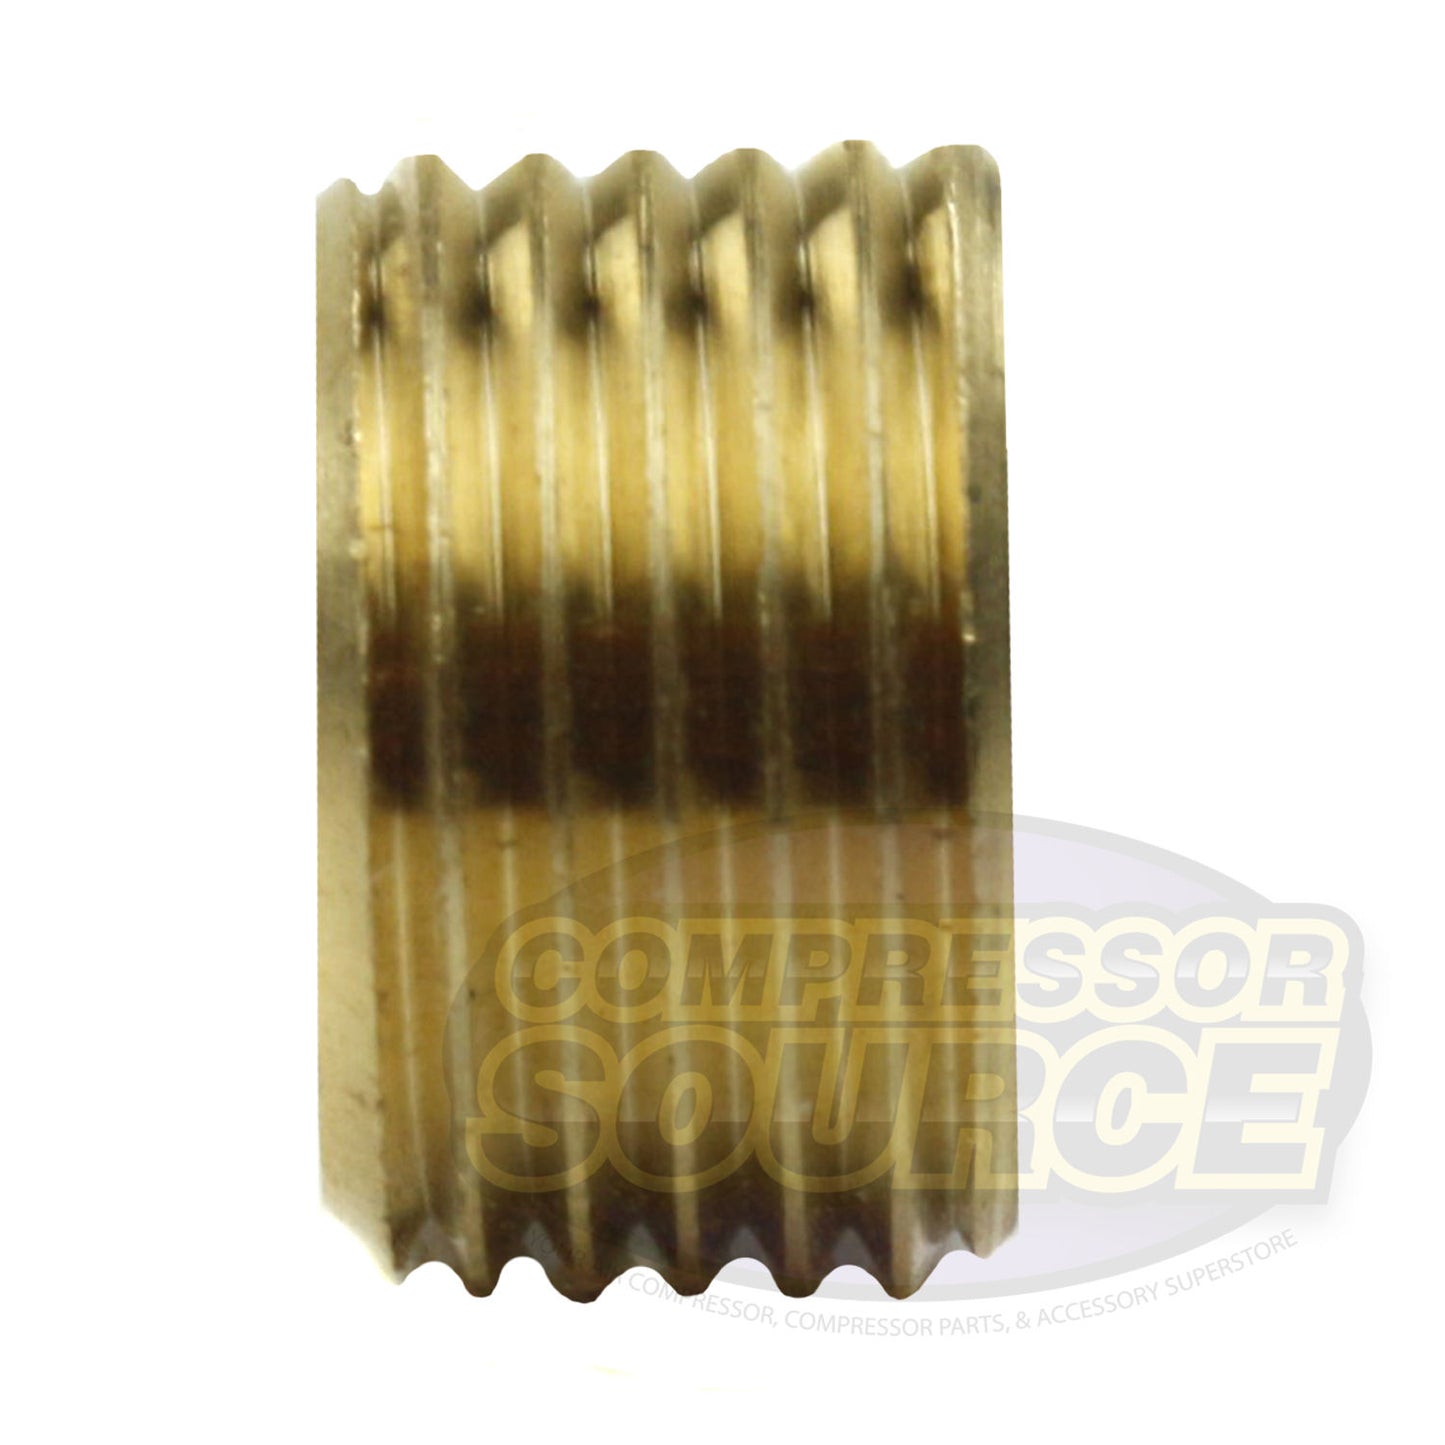 1/2"  Brass Male NPT Counter Sunk Head Plug Internal Hex Socket 50136 2-Pack